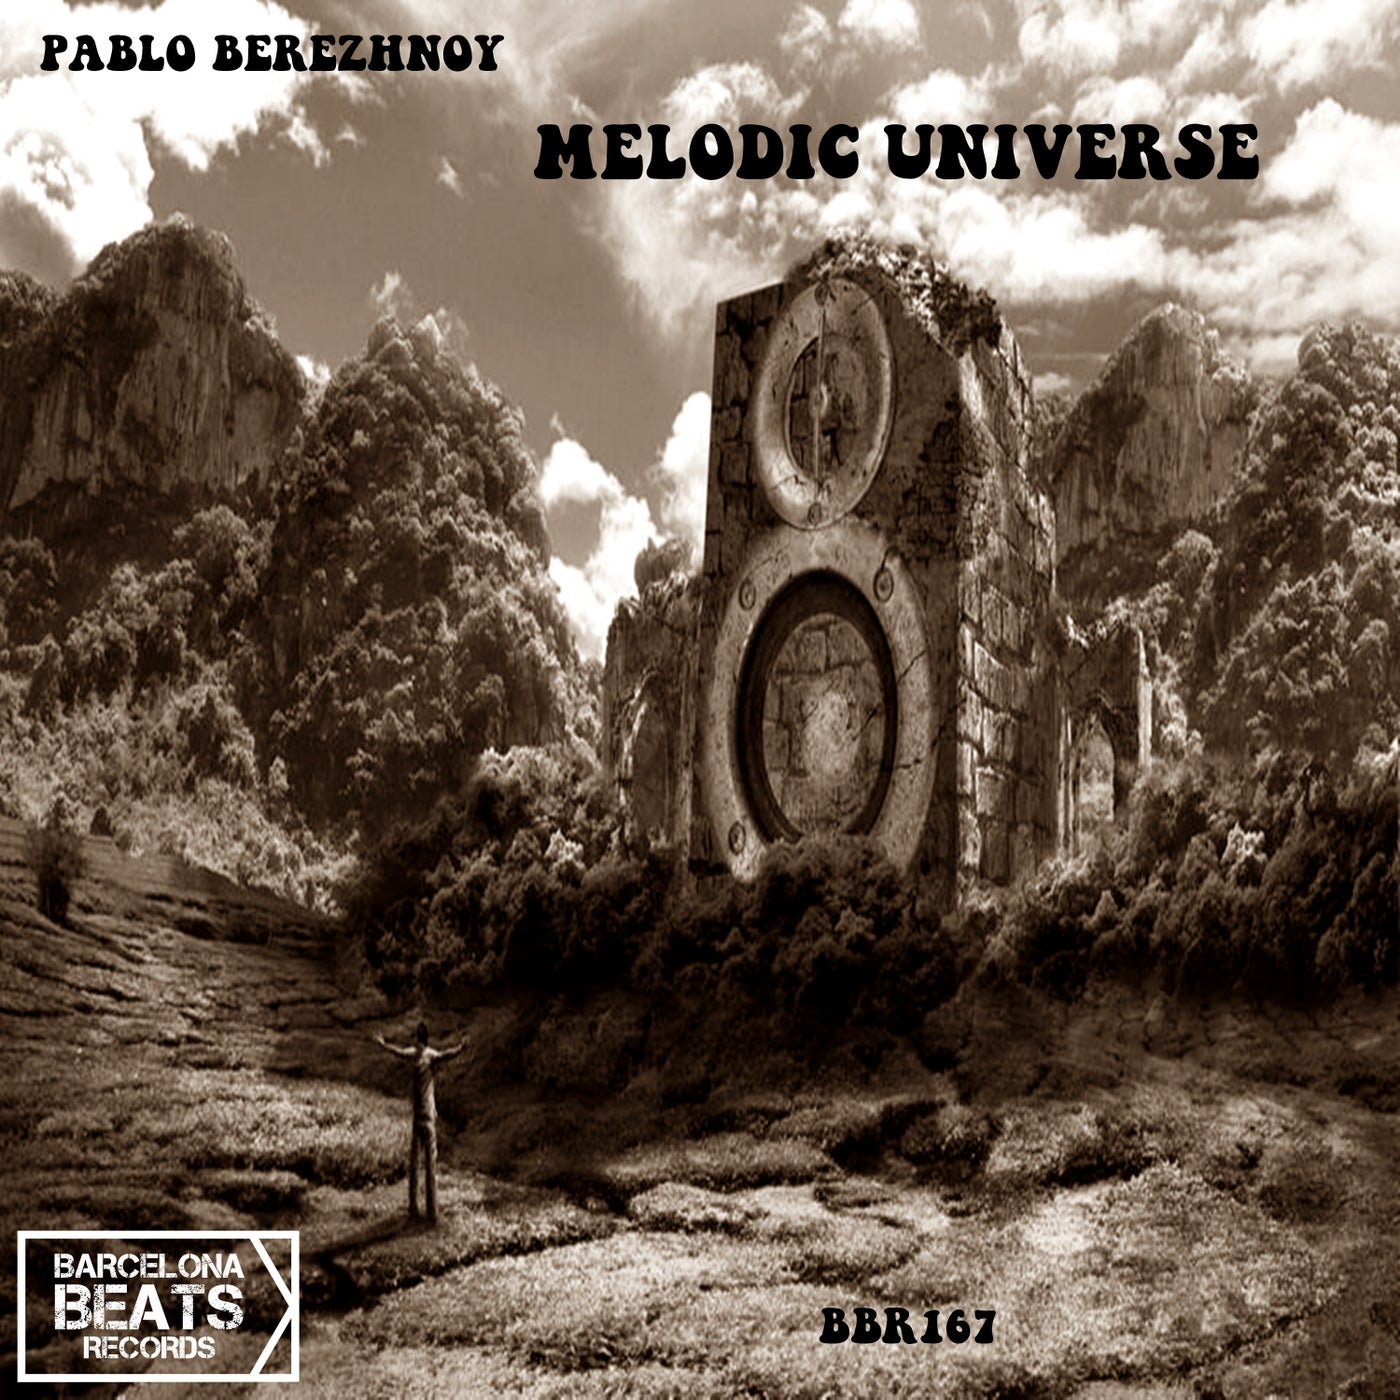 Pablo Berezhnoy - Melodic Universe [Barcelona Beats Records]